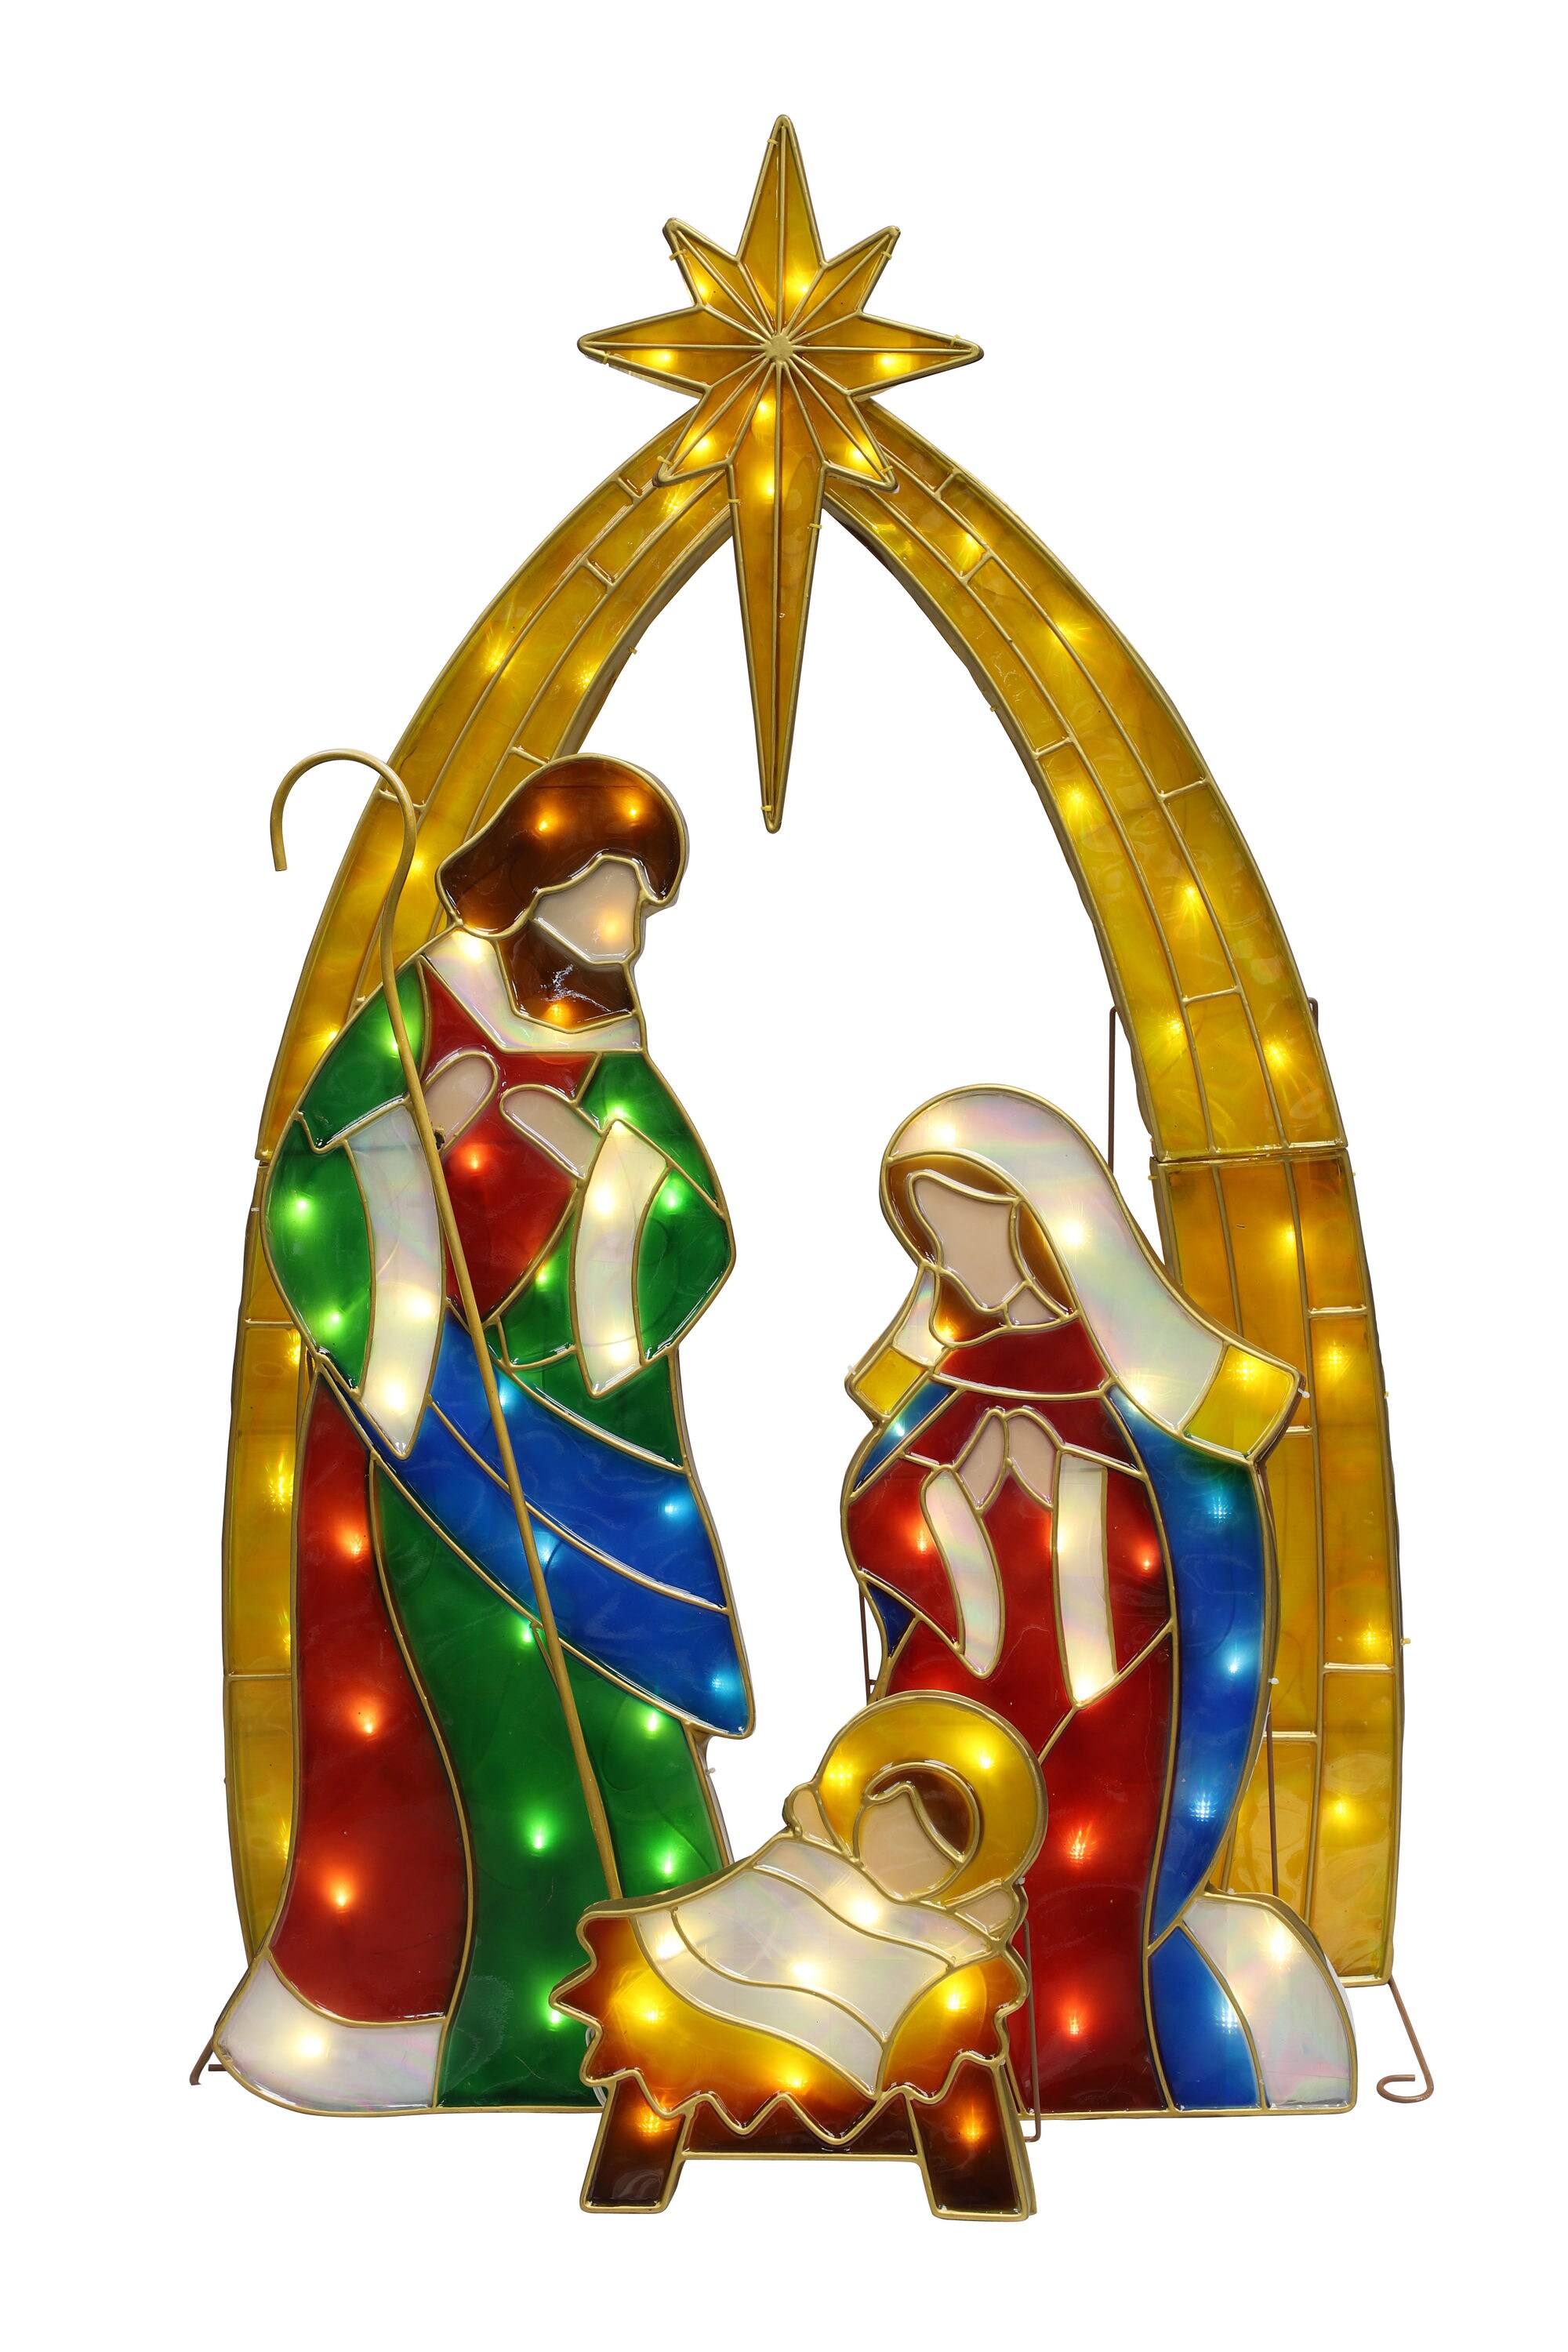 Details about   Christmas Holiday Decoration Nativity Piece LED Sculpture Home Party Centerpiece 